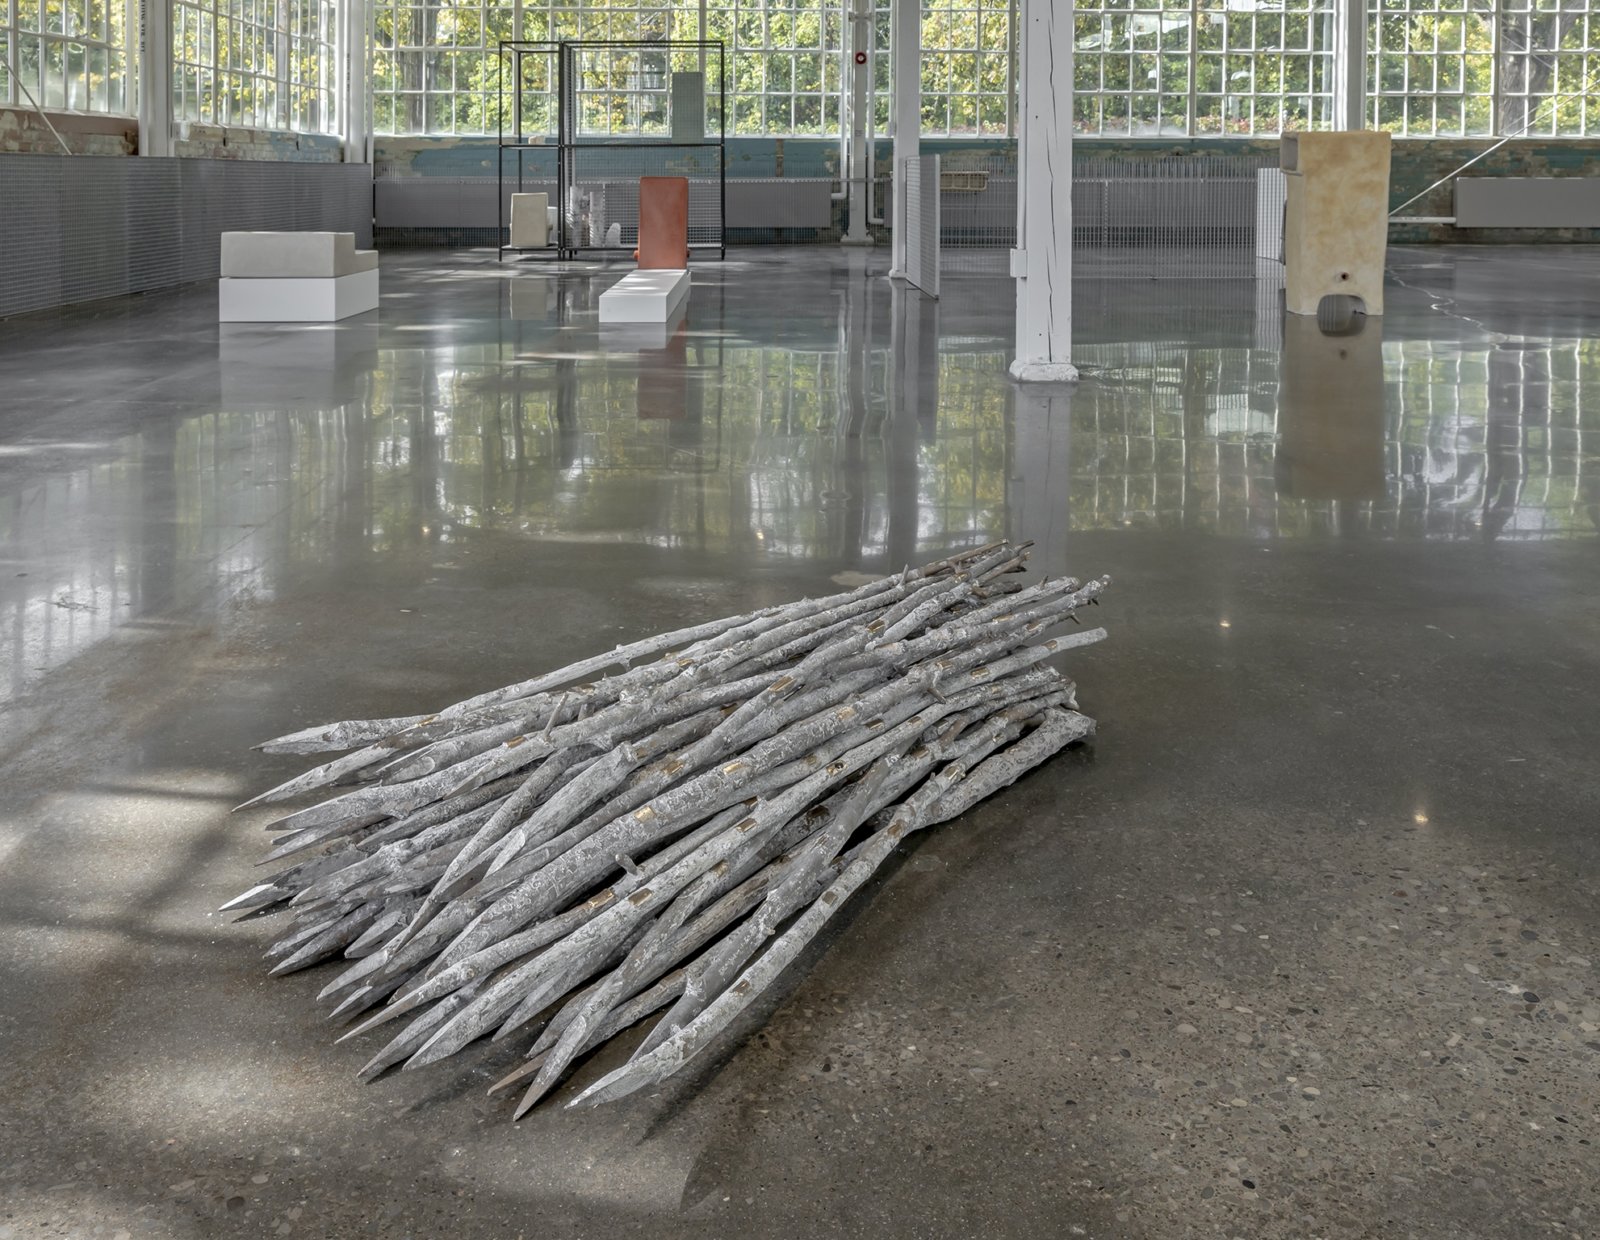 Abbas Akhavan, Study for a Garden, 2017, bronze, 50 unique pieces, each 47 x 2 x 2 in. (120 x 5 x 5 cm). Installation view, The Shoreline Dilemma, Toronto Biennial of Art, Small Arms Inspection Building, Toronto, Canada, 2019